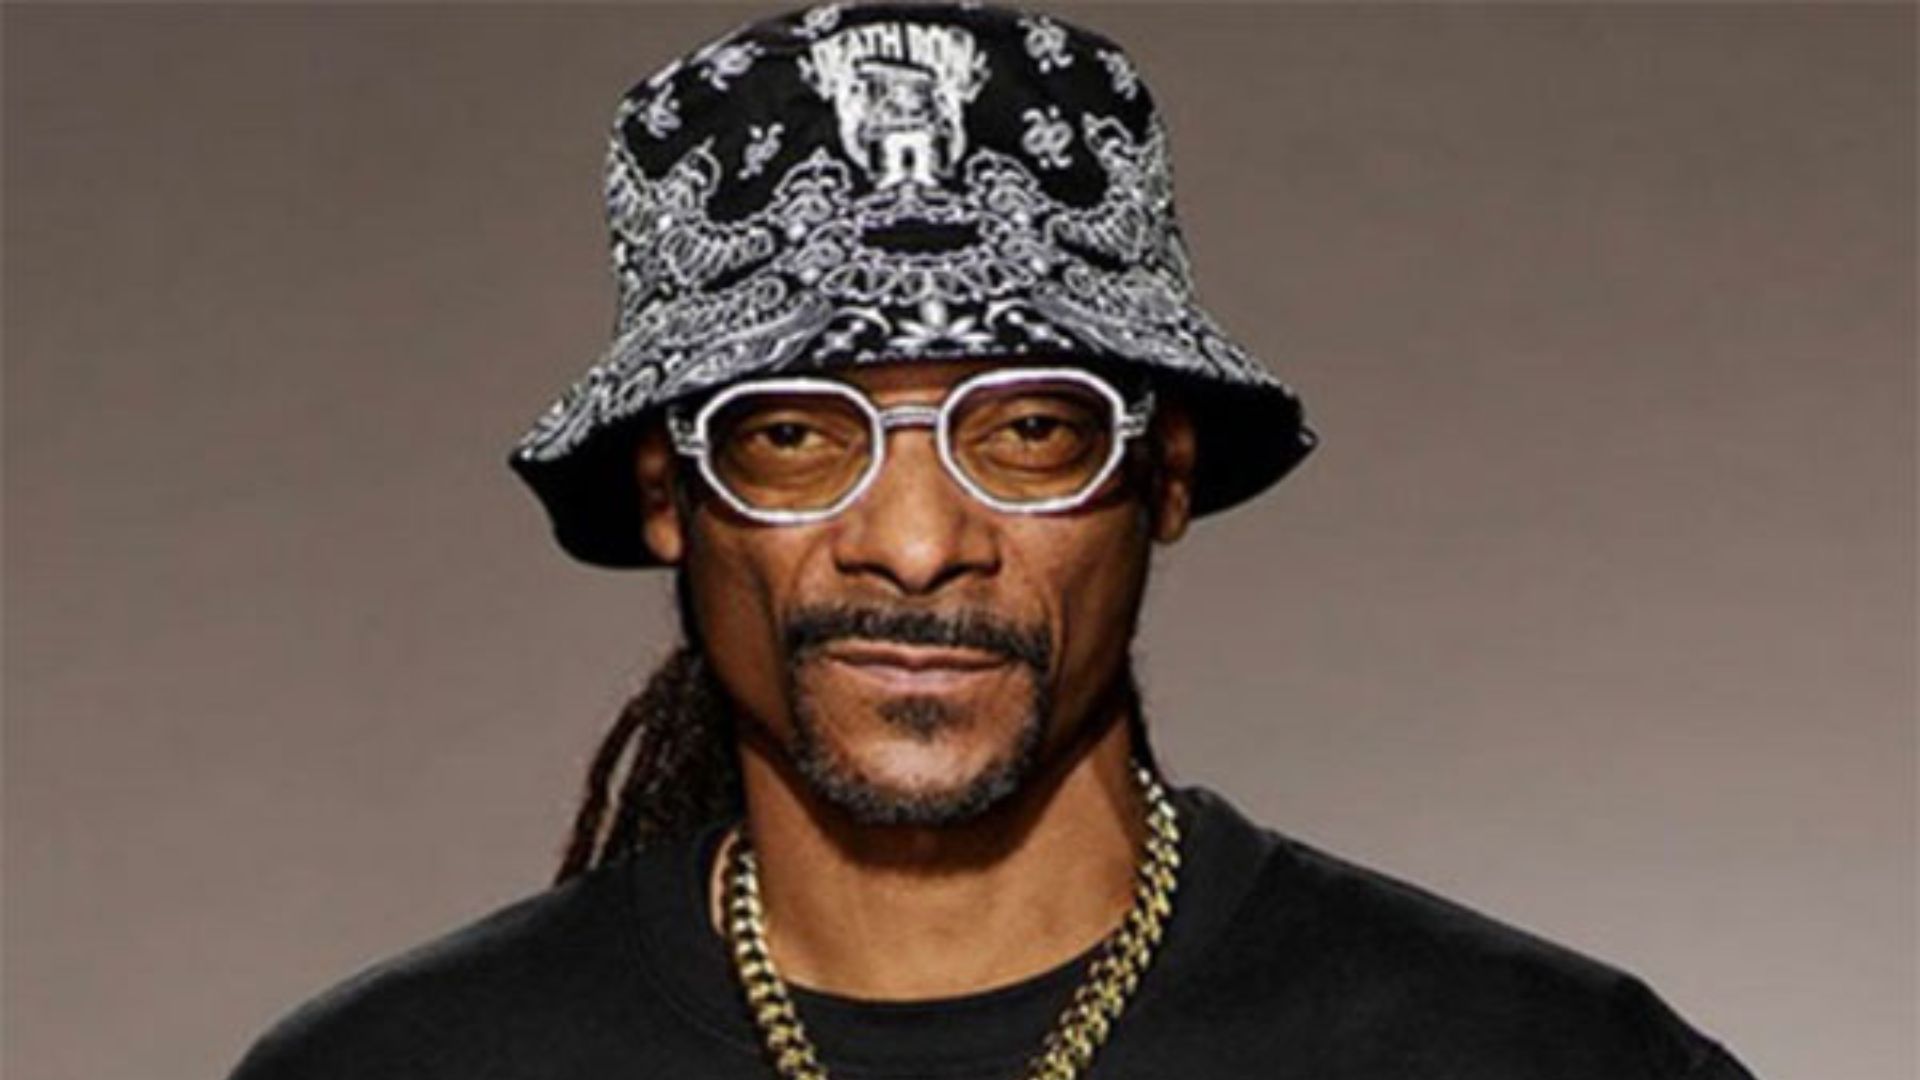 Paris Olympics 2024: Snoop Dogg Named one of Final Torchbearers